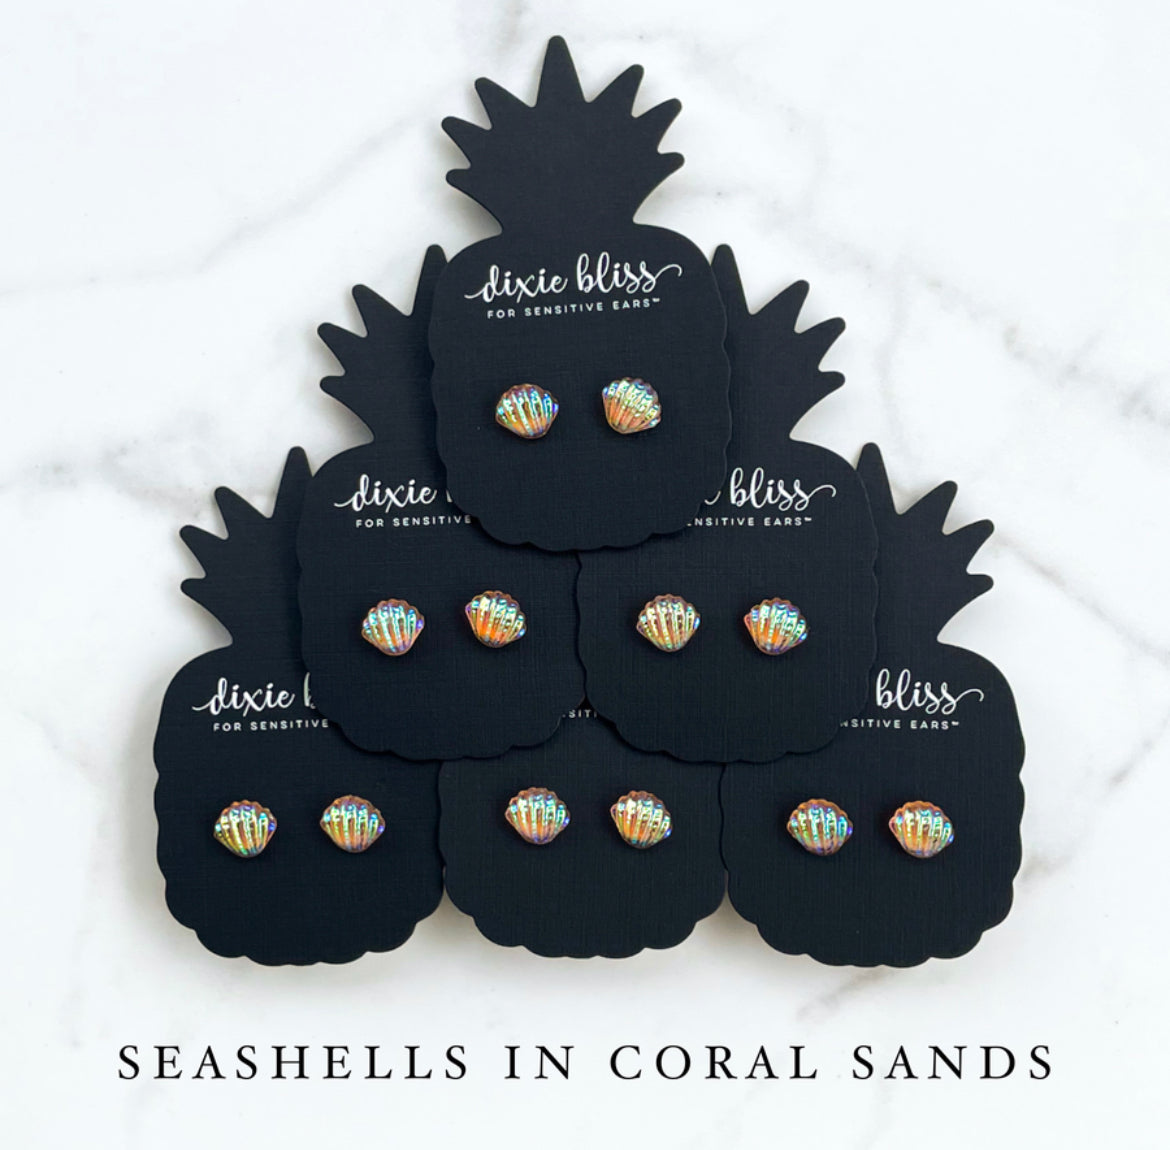 Seashells in Coral Sands - Dixie Bliss - Single Stud Earrings